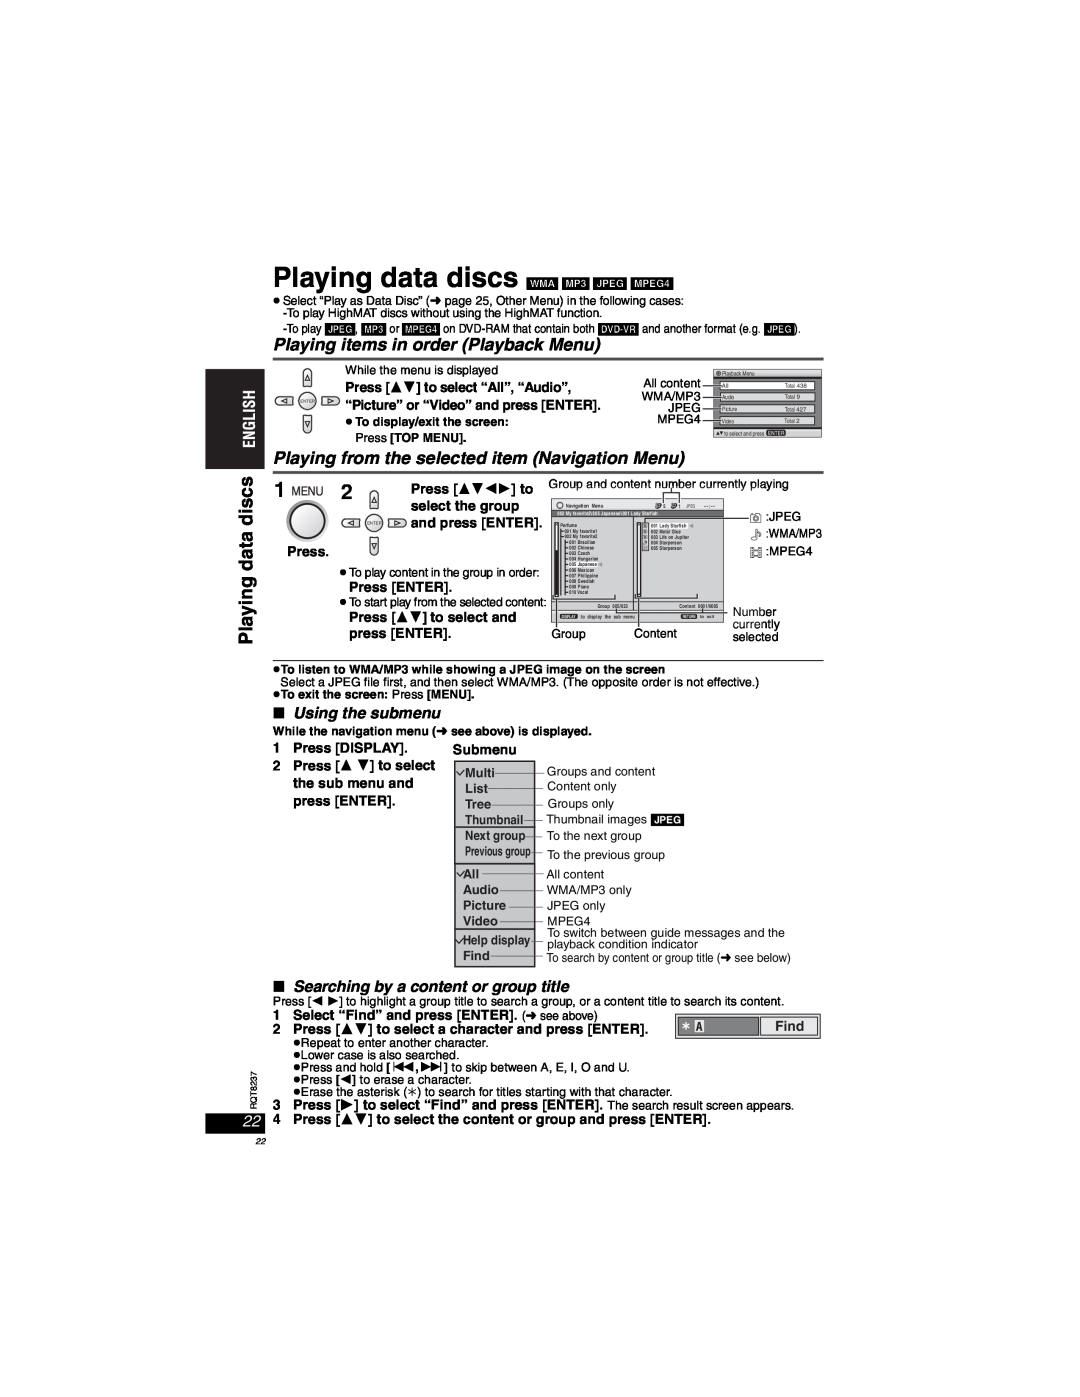 Panasonic DVD-LX97 Playing data discs, Playing items in order Playback Menu, w Using the submenu, Press DISPLAY, Submenu 